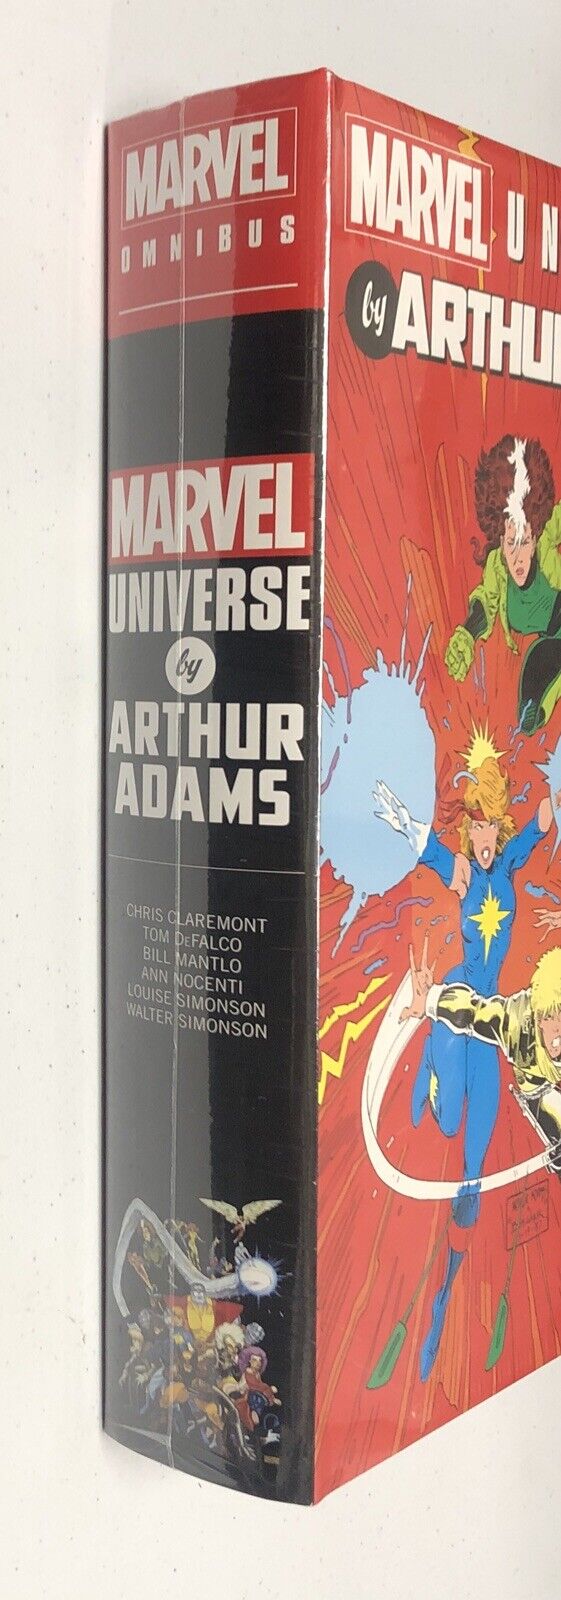 Marvel Universe By Arthur Adams (2023) Omnibus Chris Claremont•Tom DeFalco